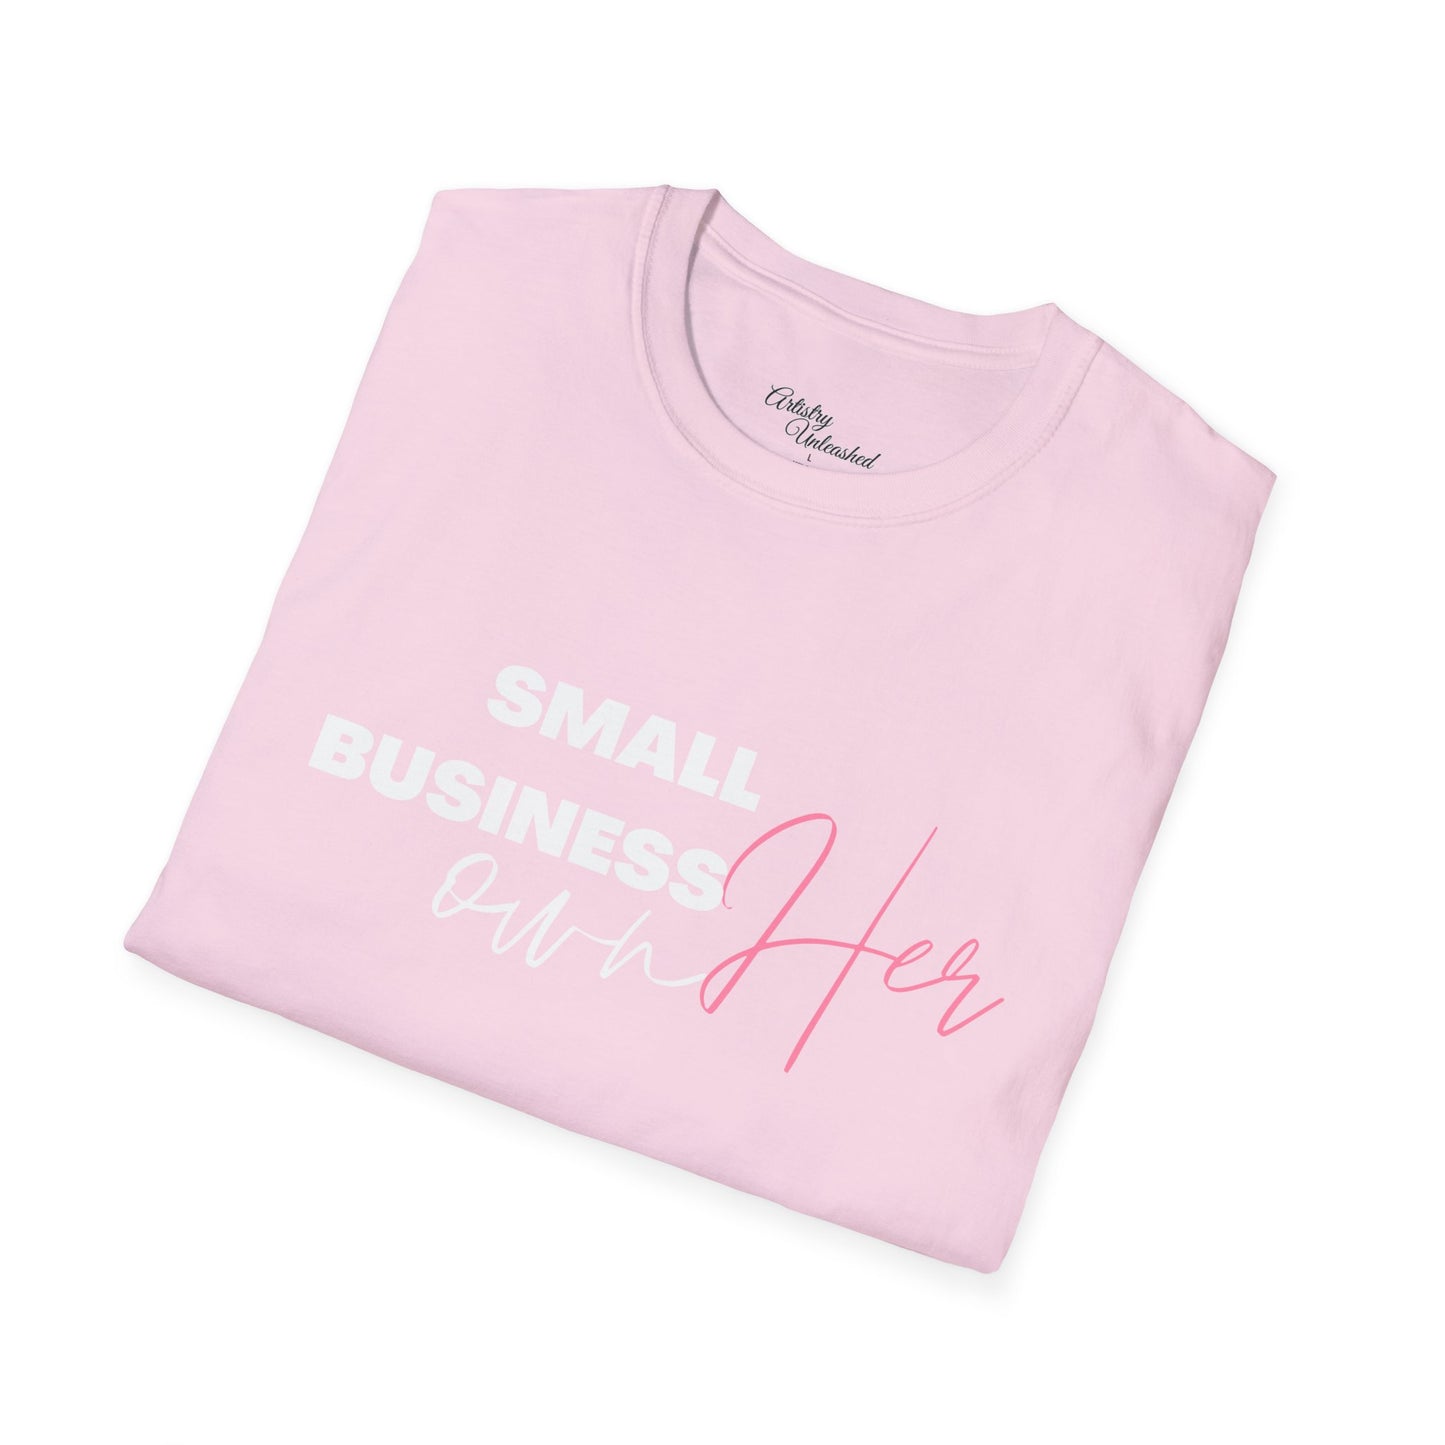 Small Business Manifesting White Unisex Softstyle T-Shirt